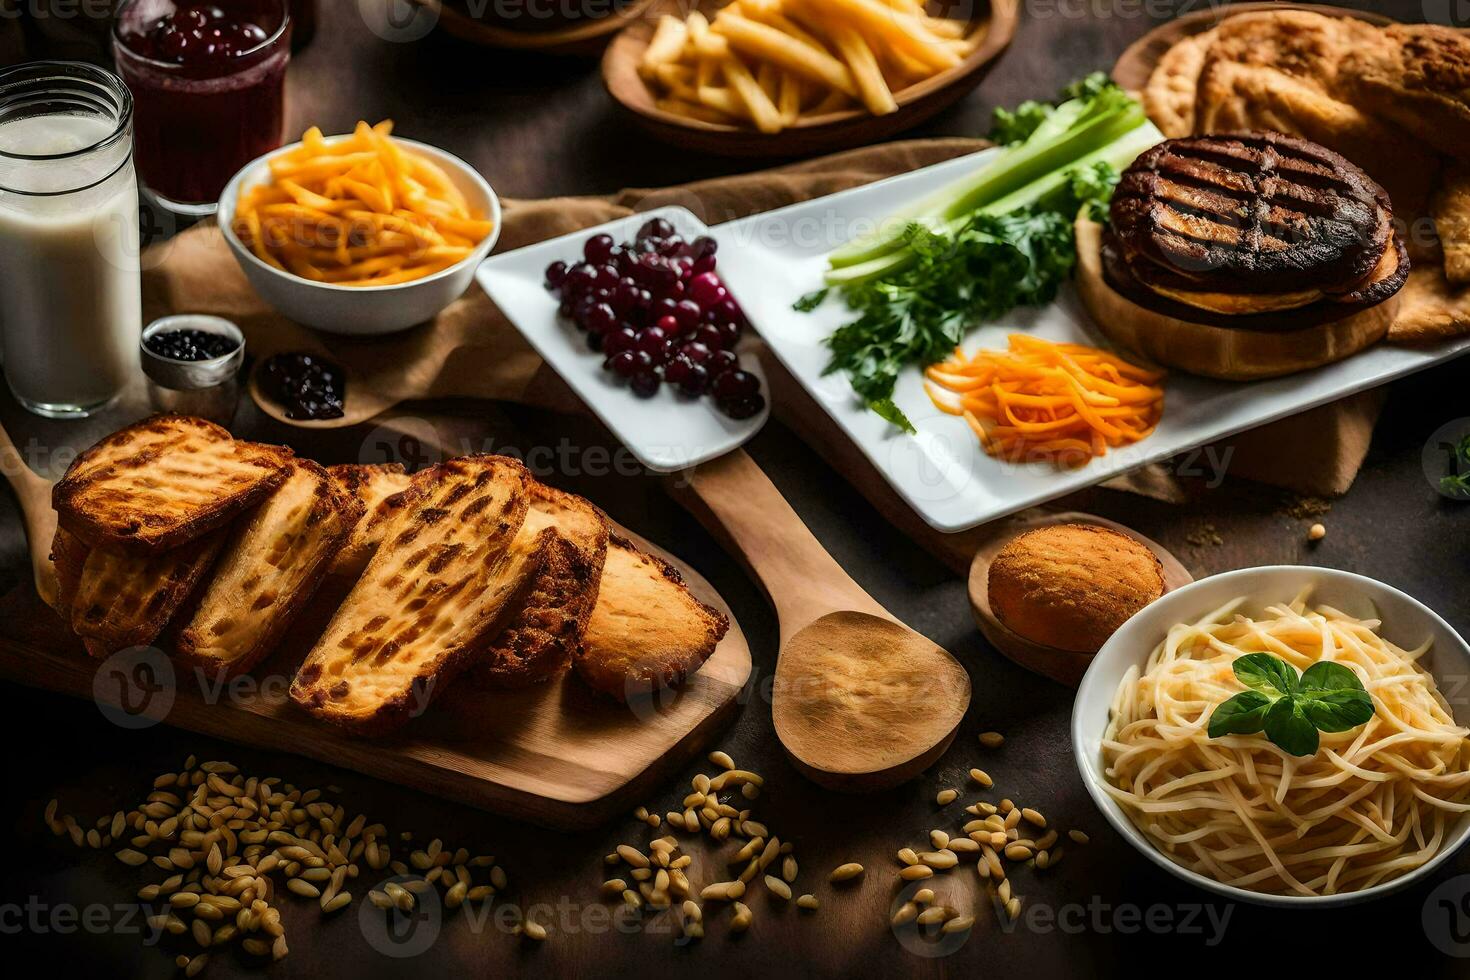 divers voedingsmiddelen inclusief brood, kaas, vlees, groenten en melk. ai-gegenereerd foto